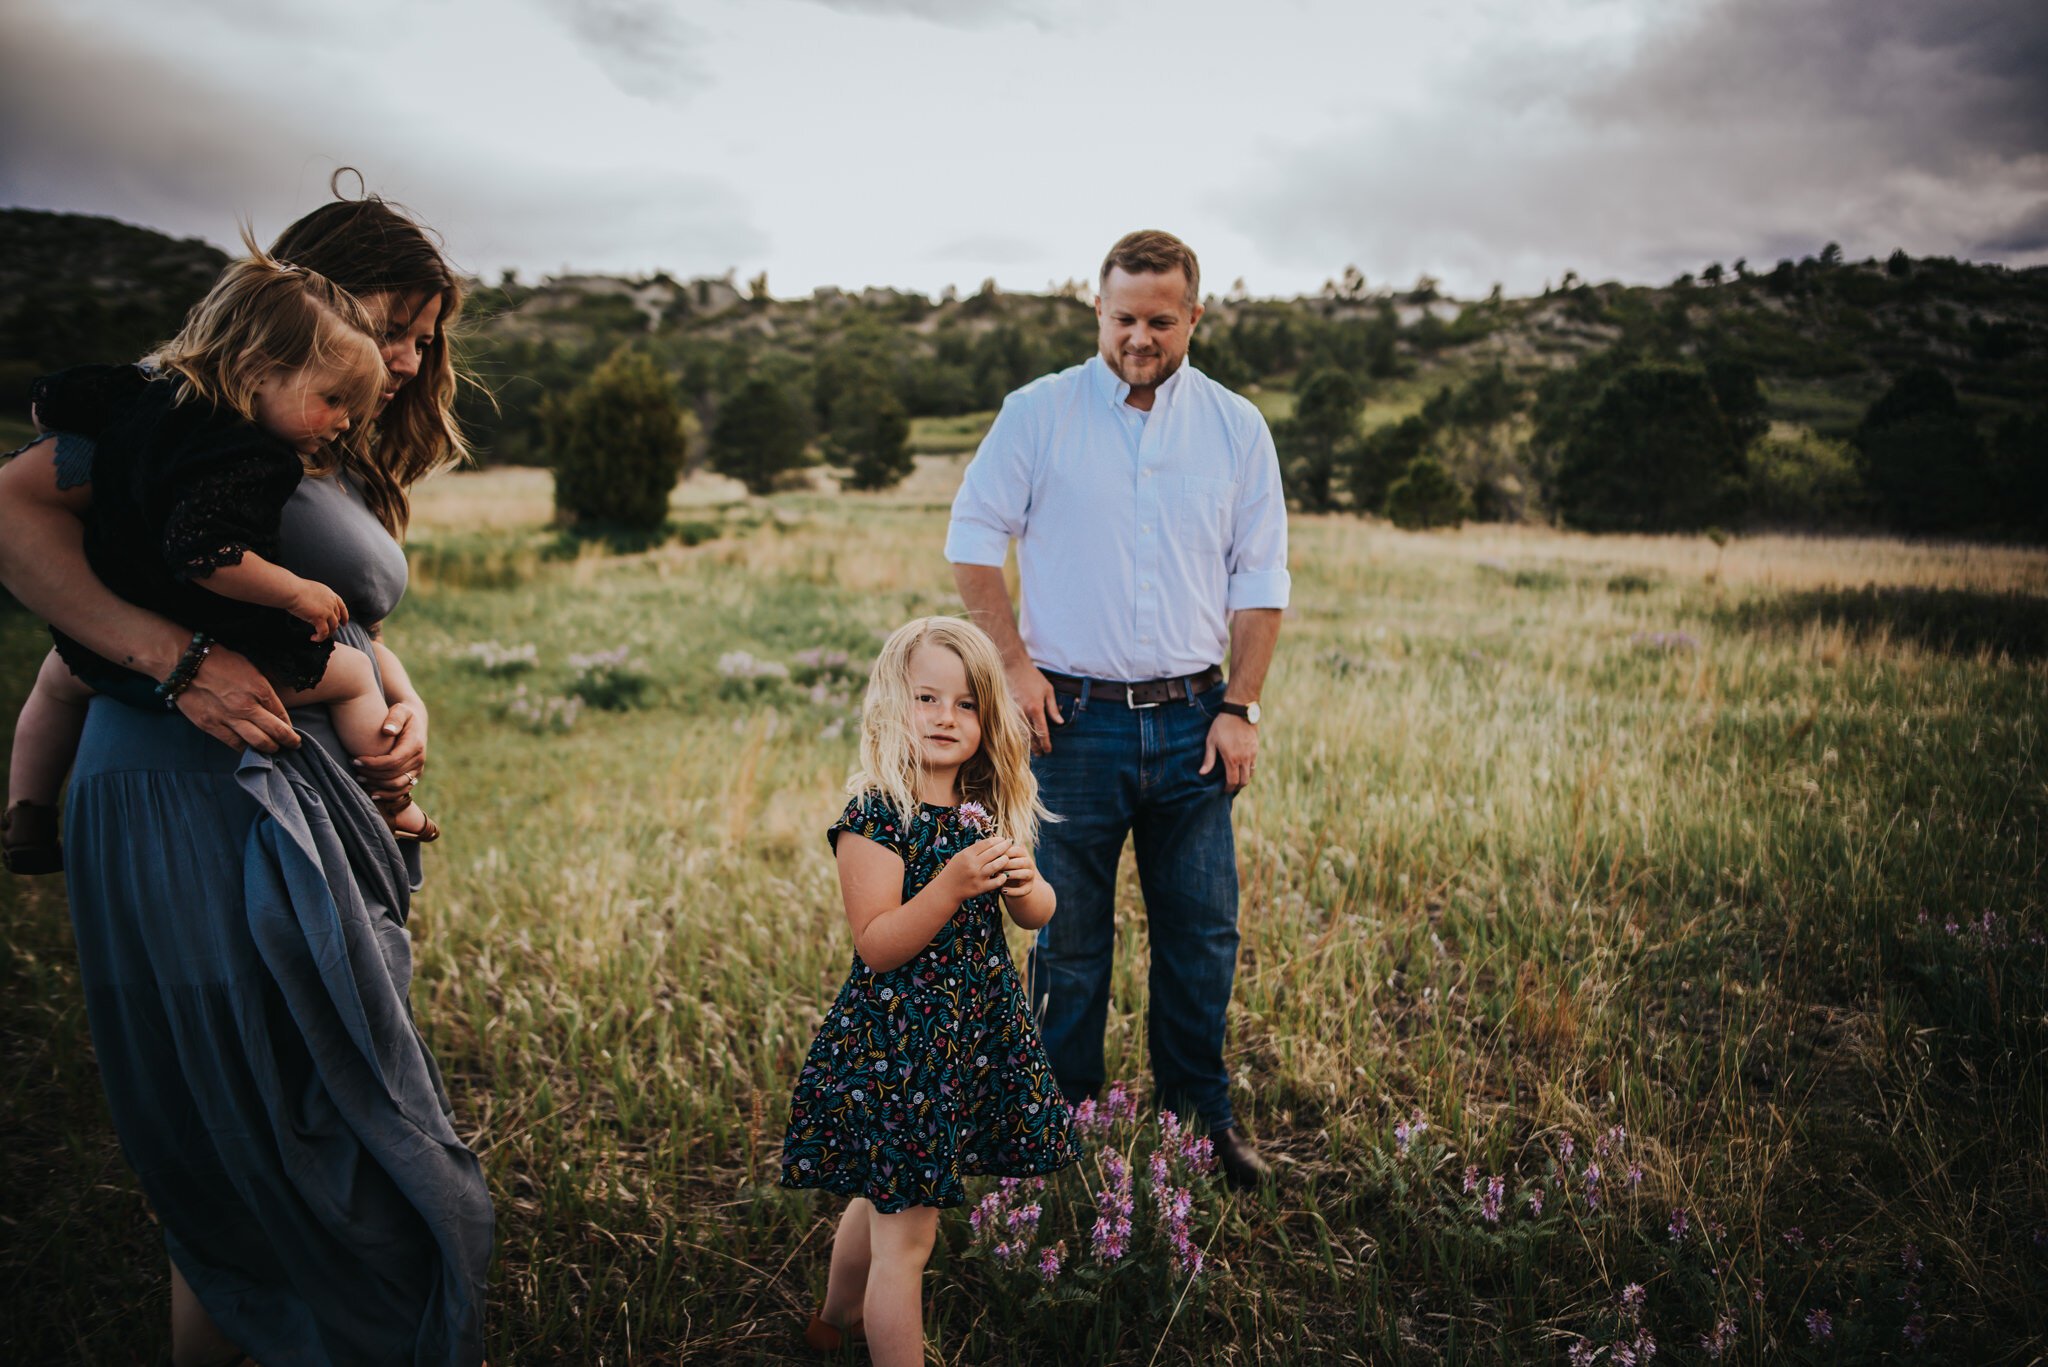 Mary+Lousia+Wiencek+Family+Session+Colorado+Springs+Colorado+Sunset+Mom+Dad+Daughters+Ute+Valley+Park+Wild+Prairie+Photography-01-2020.jpeg